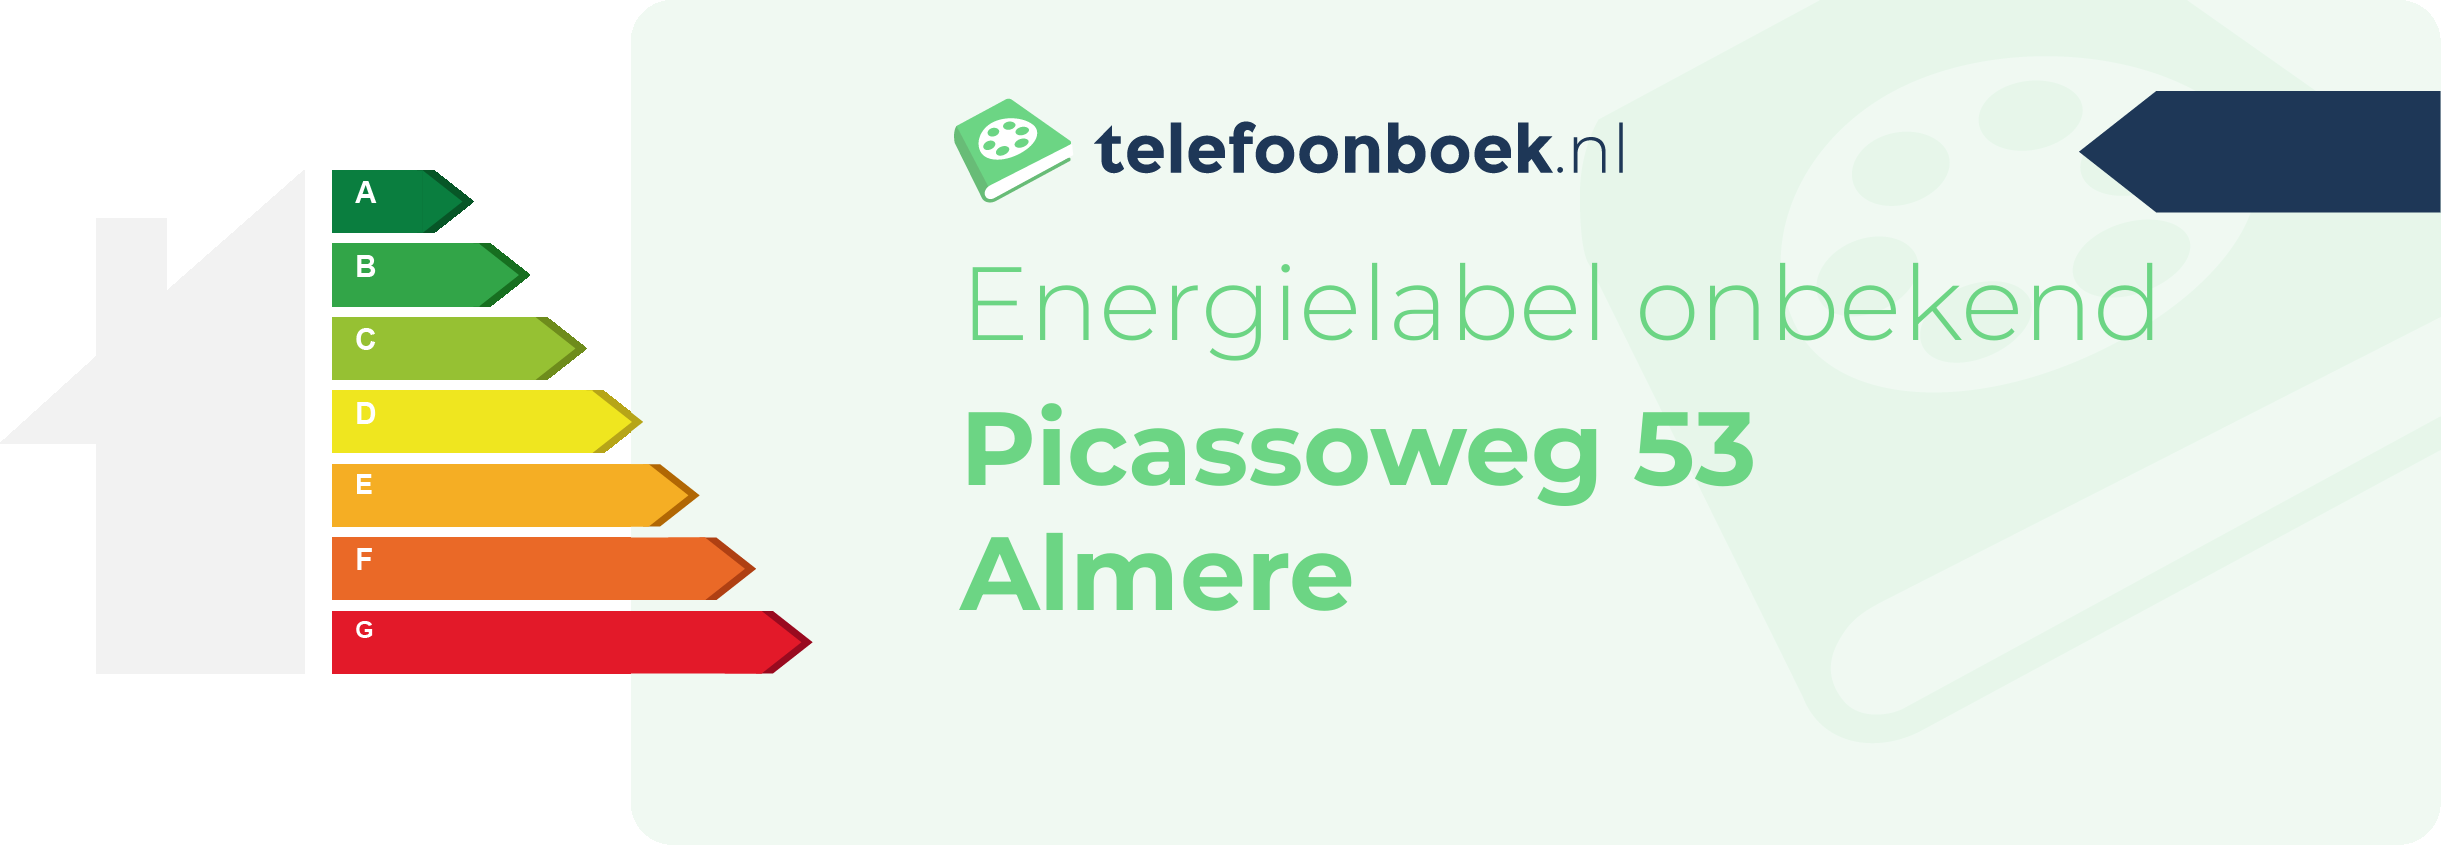 Energielabel Picassoweg 53 Almere